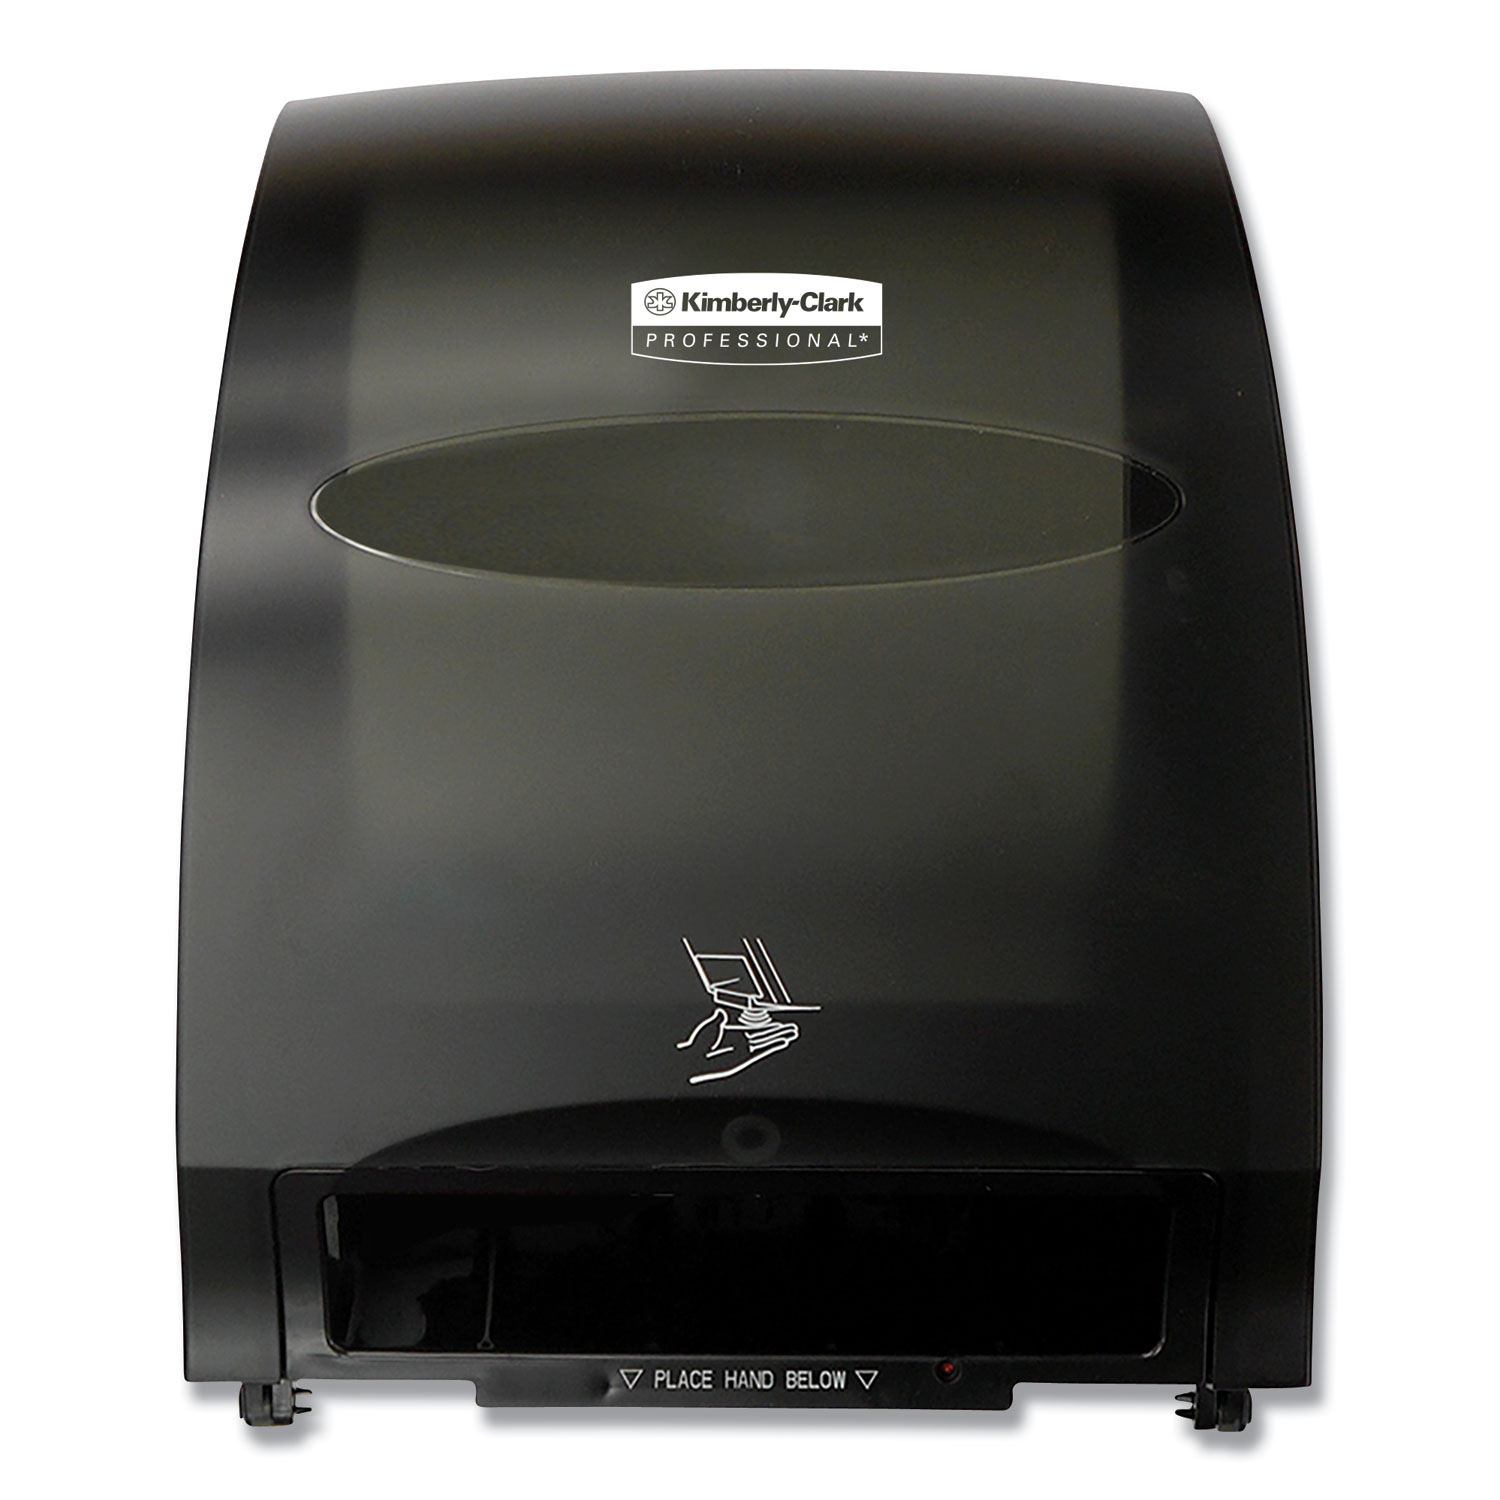 Kimberly-Clark Professional™ Electronic Hard Roll Towel Dispenser - Black, 12.70 x 15.76 x 9.57